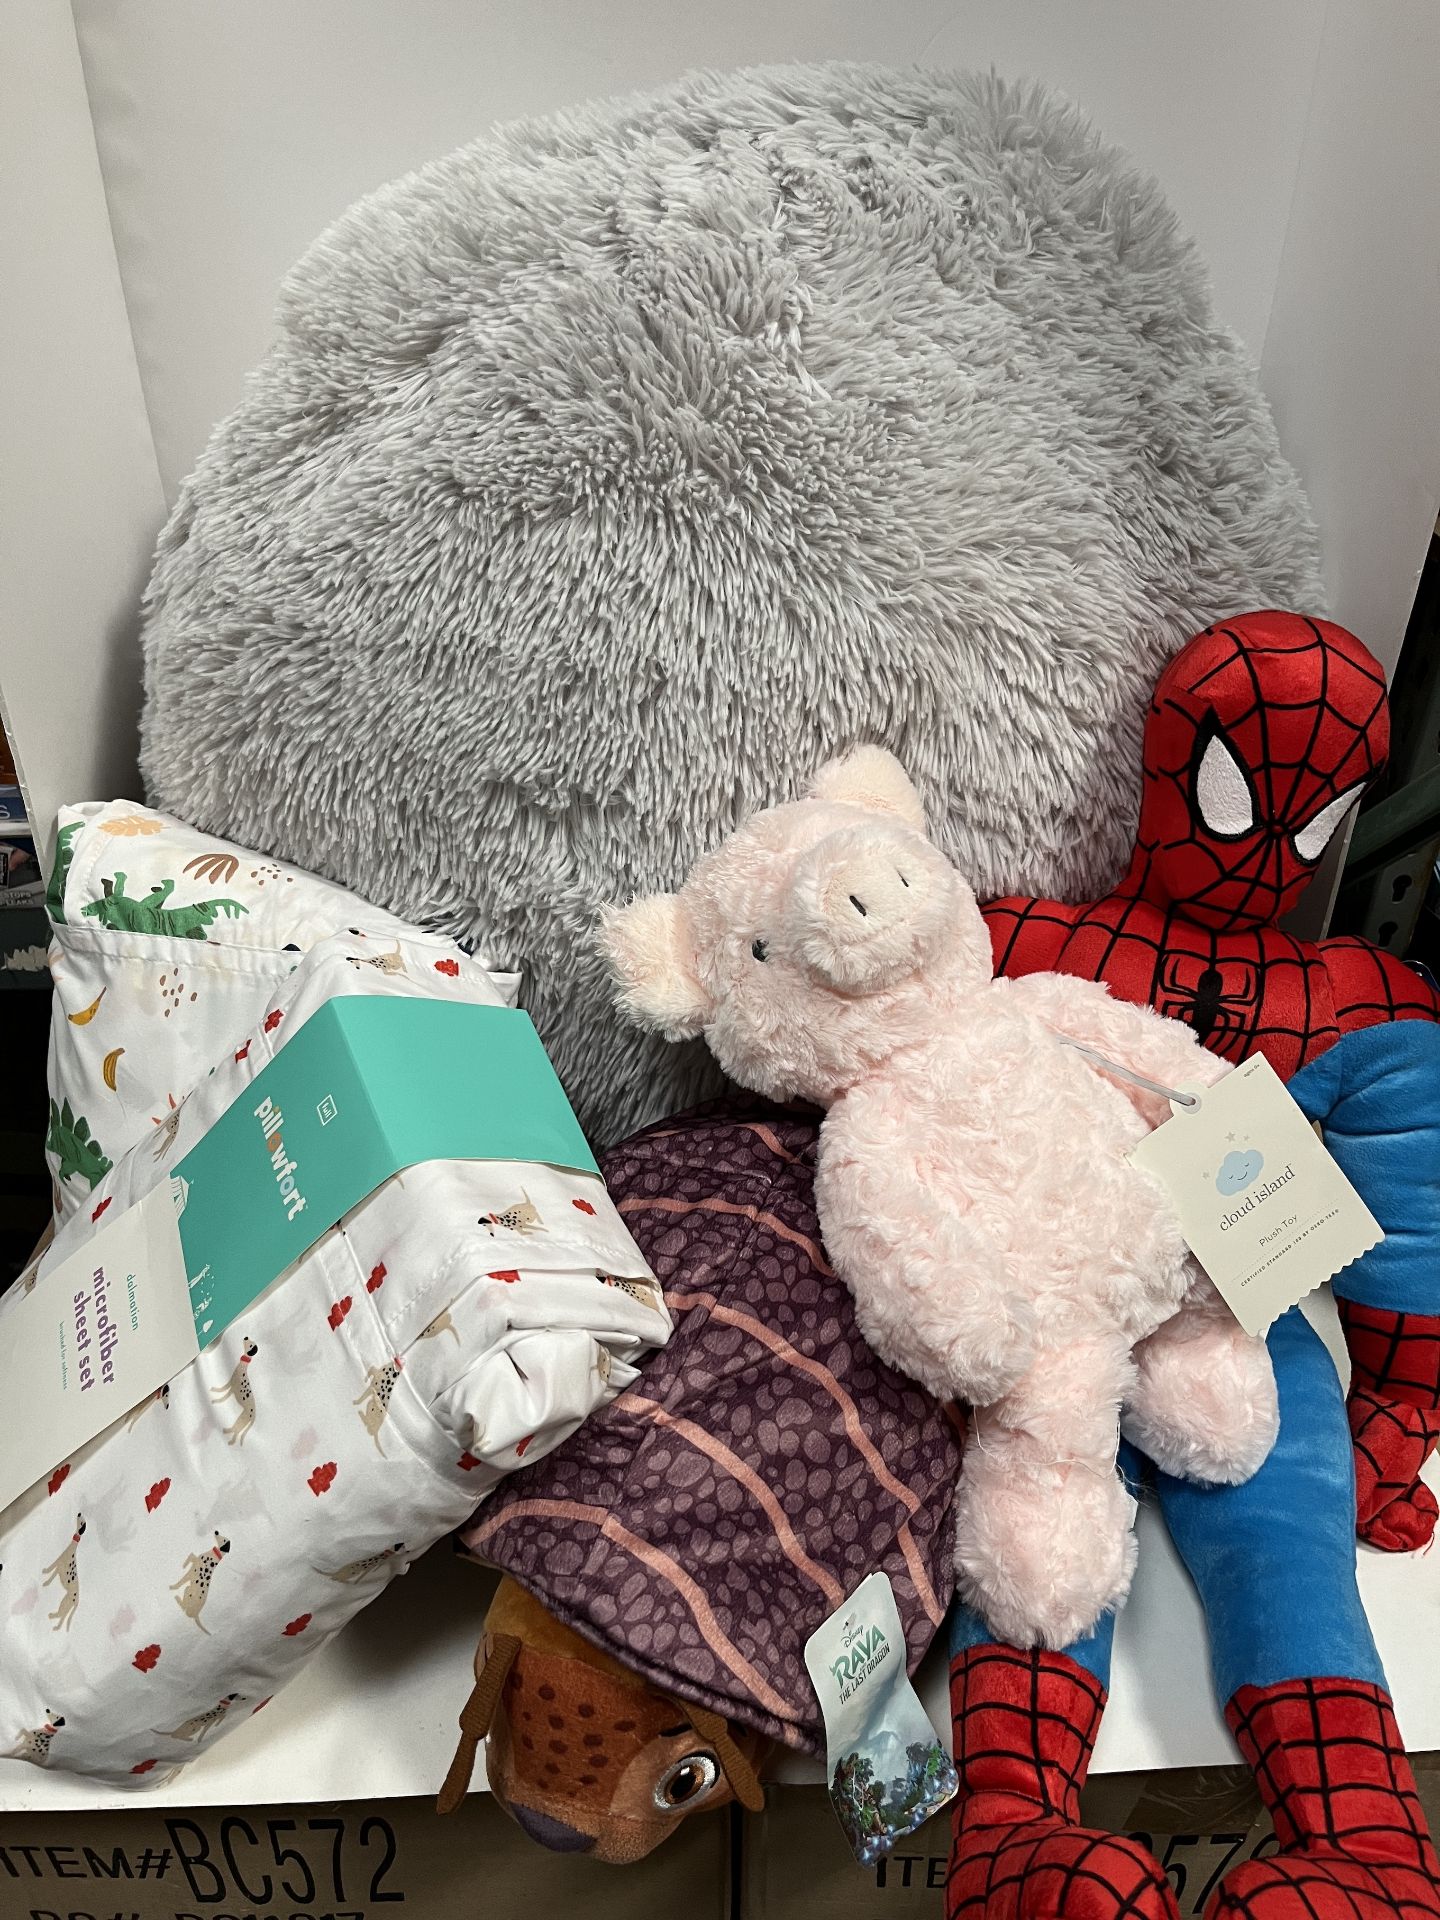 Bedding, fluffy pillow and branded stuck animals, Disney, Marvel, etc. NB3